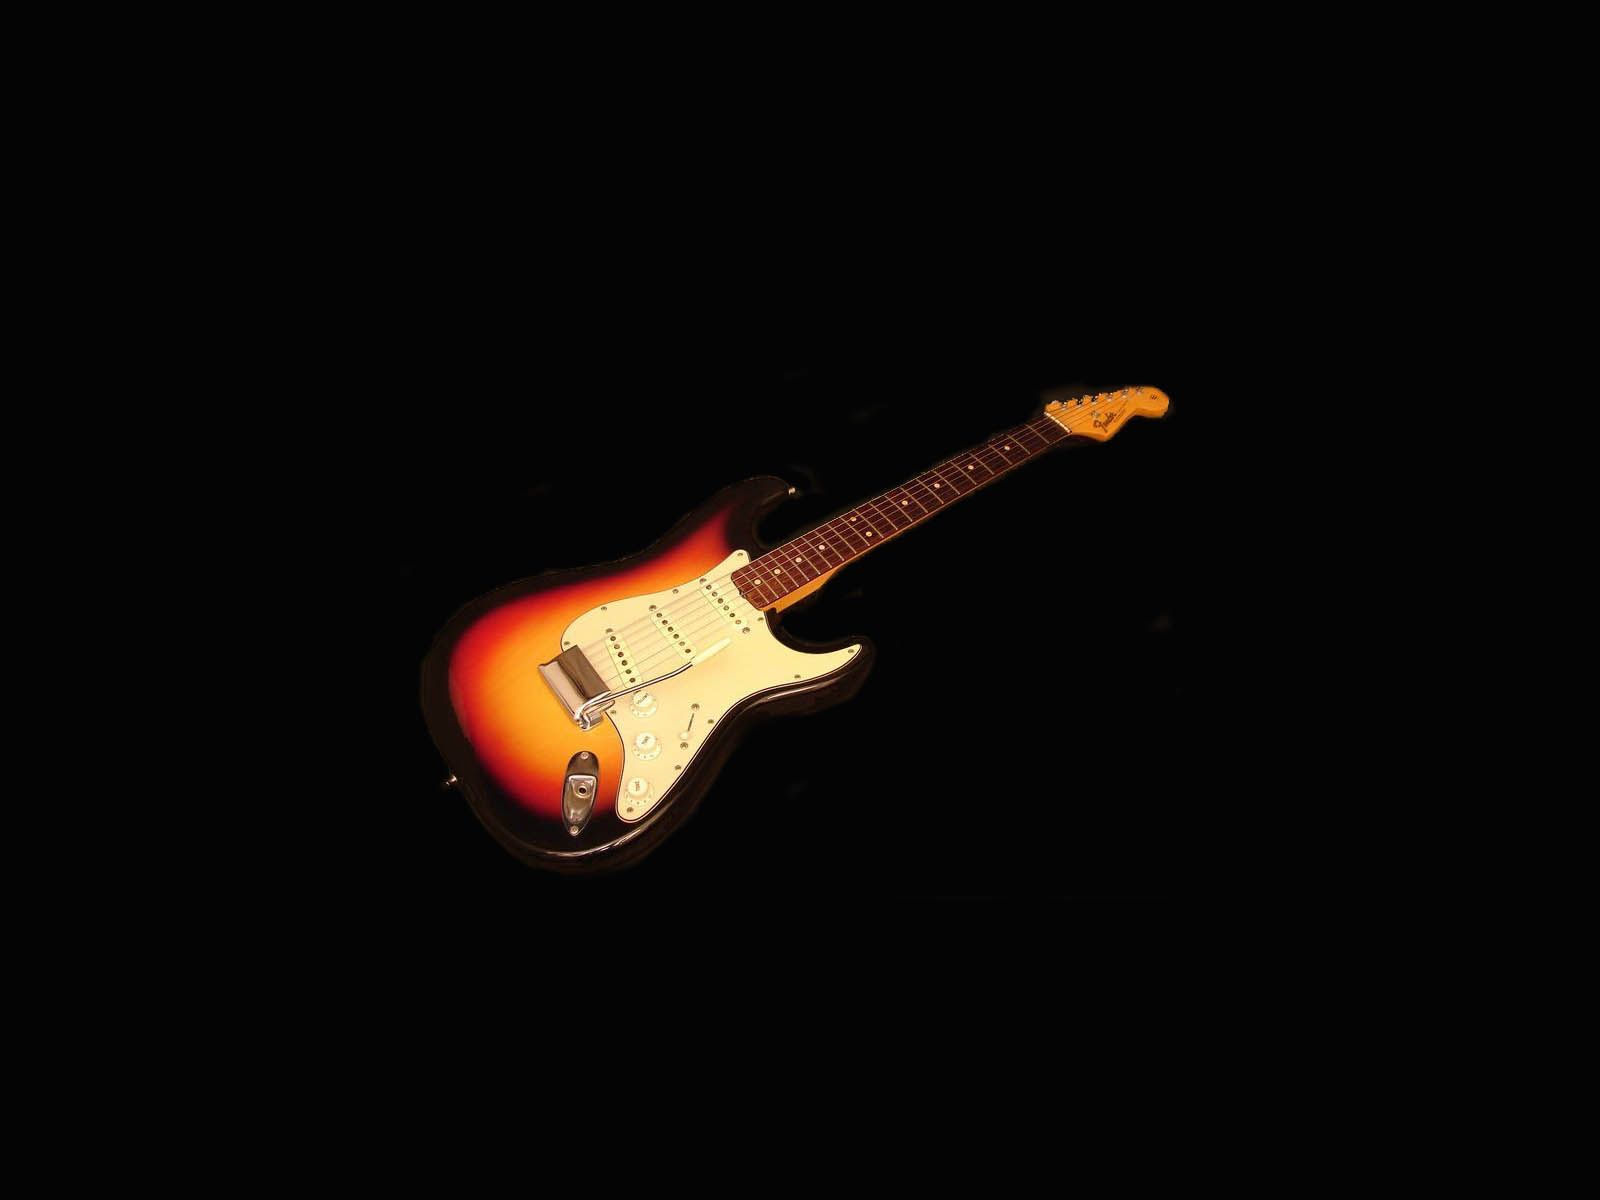 Guitar Fender Stratocaster Black Wallpaper HD